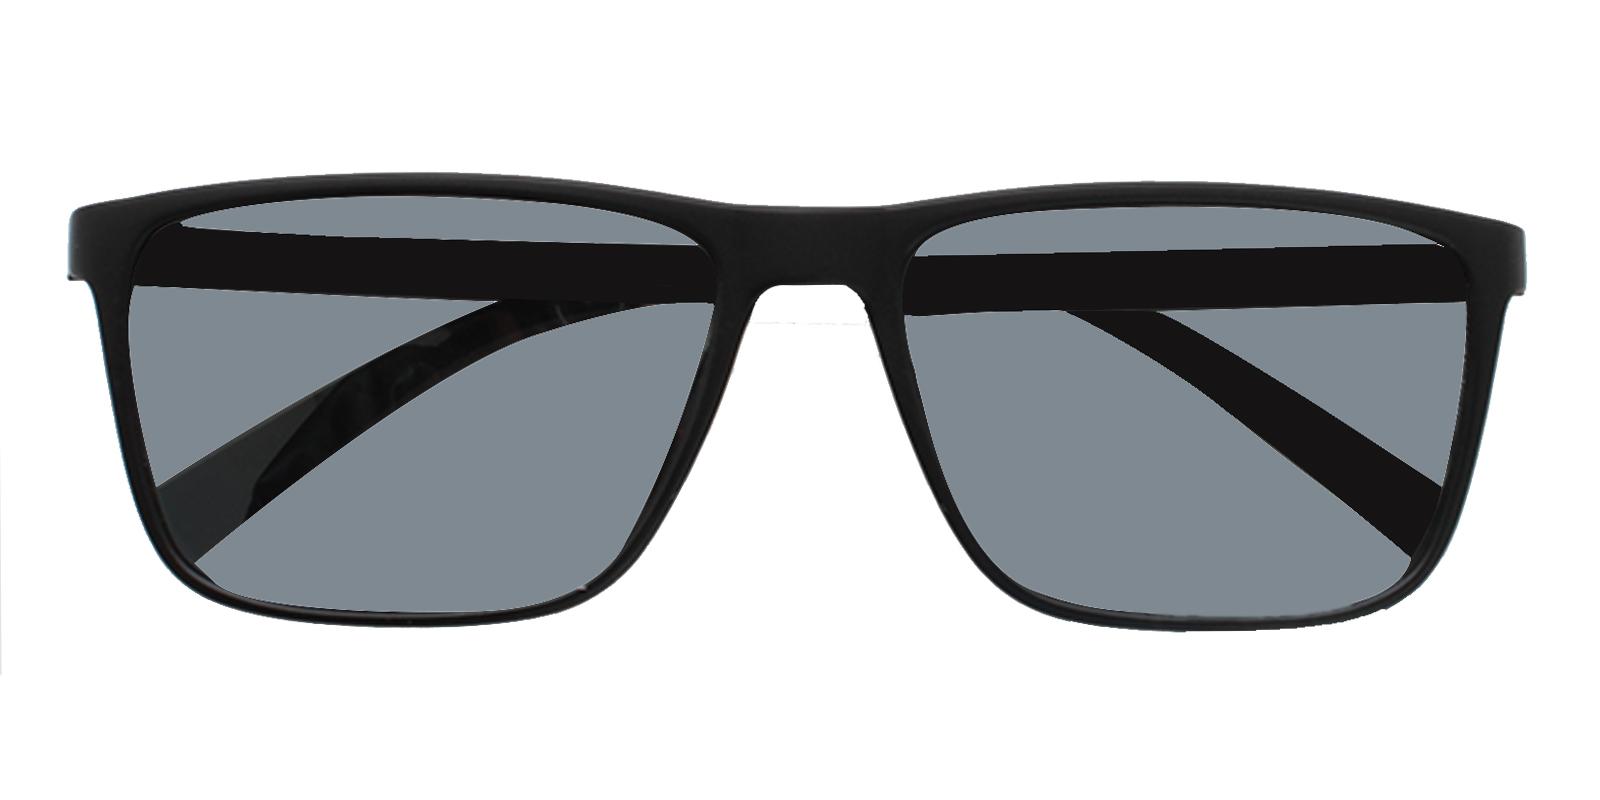 Reunion Black TR Sunglasses , UniversalBridgeFit Frames from ABBE Glasses